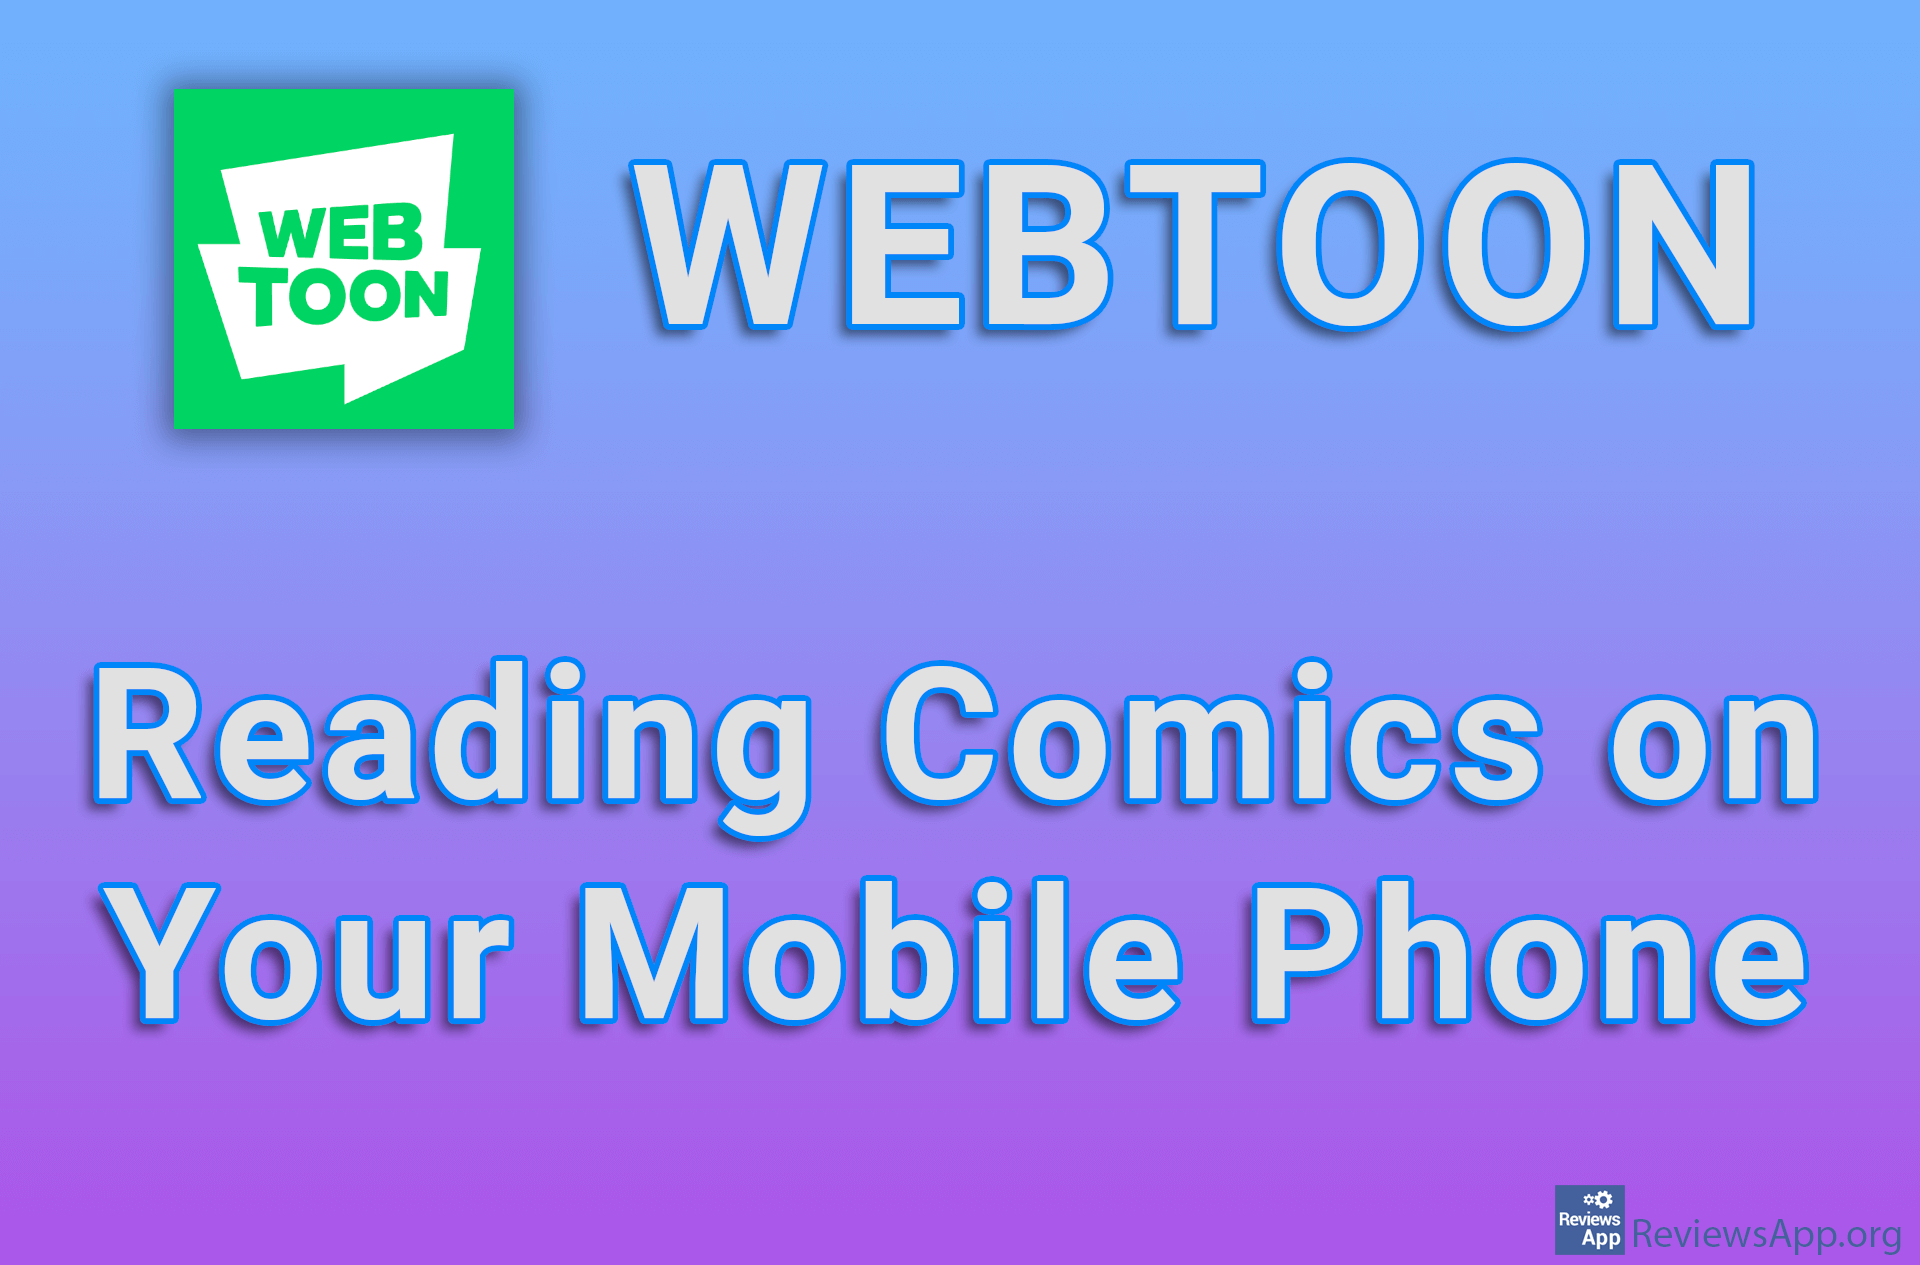 WEBTOON – Reading Comics on Your Mobile Phone